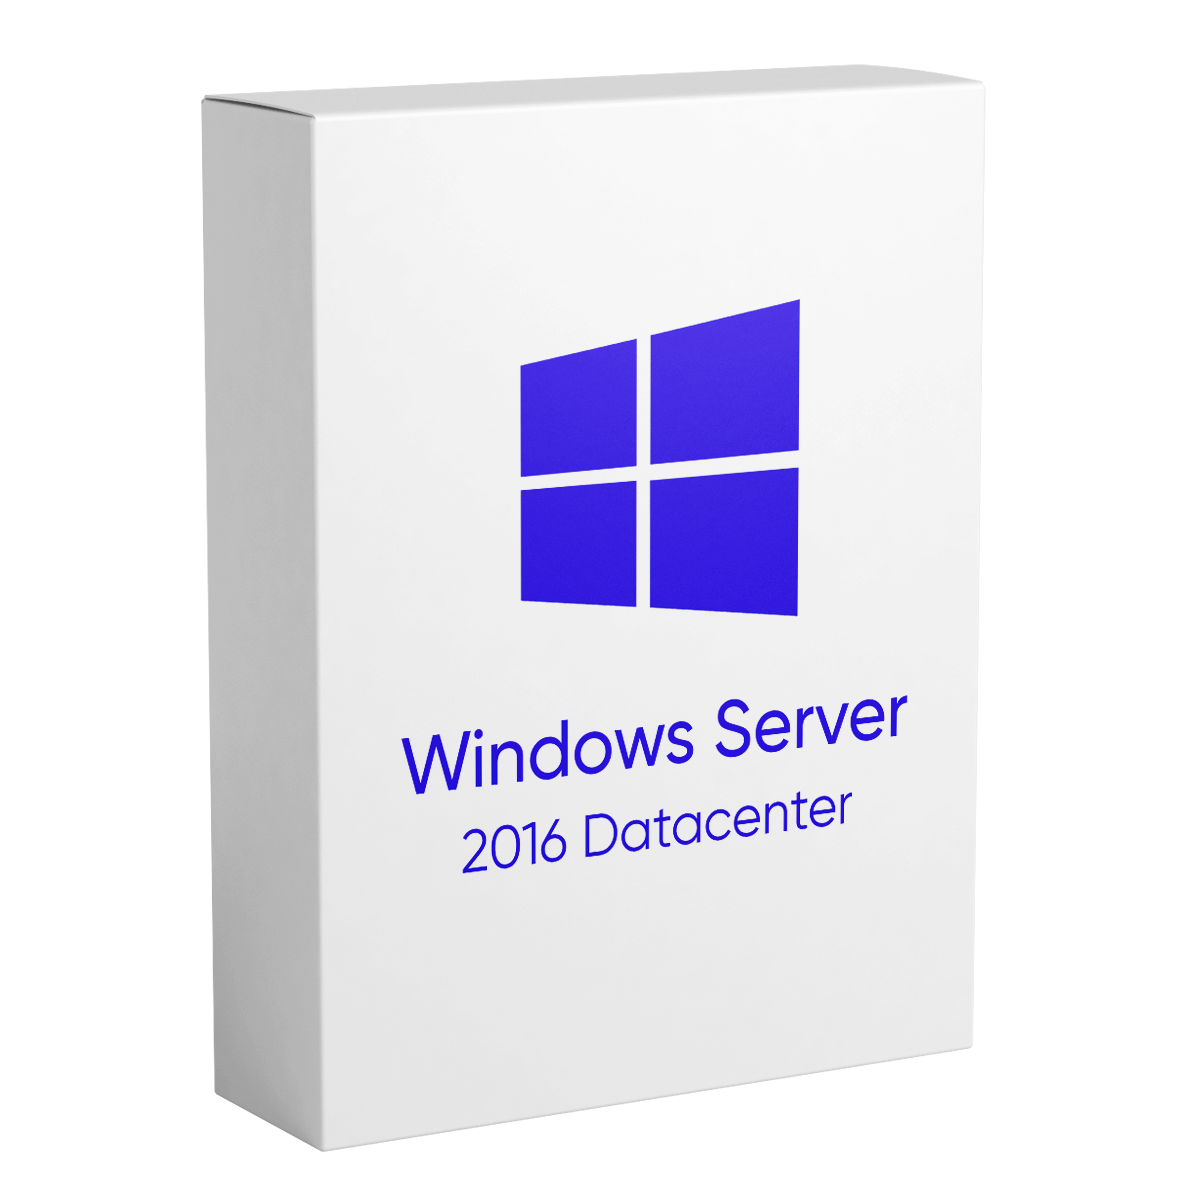 Windows Server 2016 Datacenter - Lifetime License For 1 PC